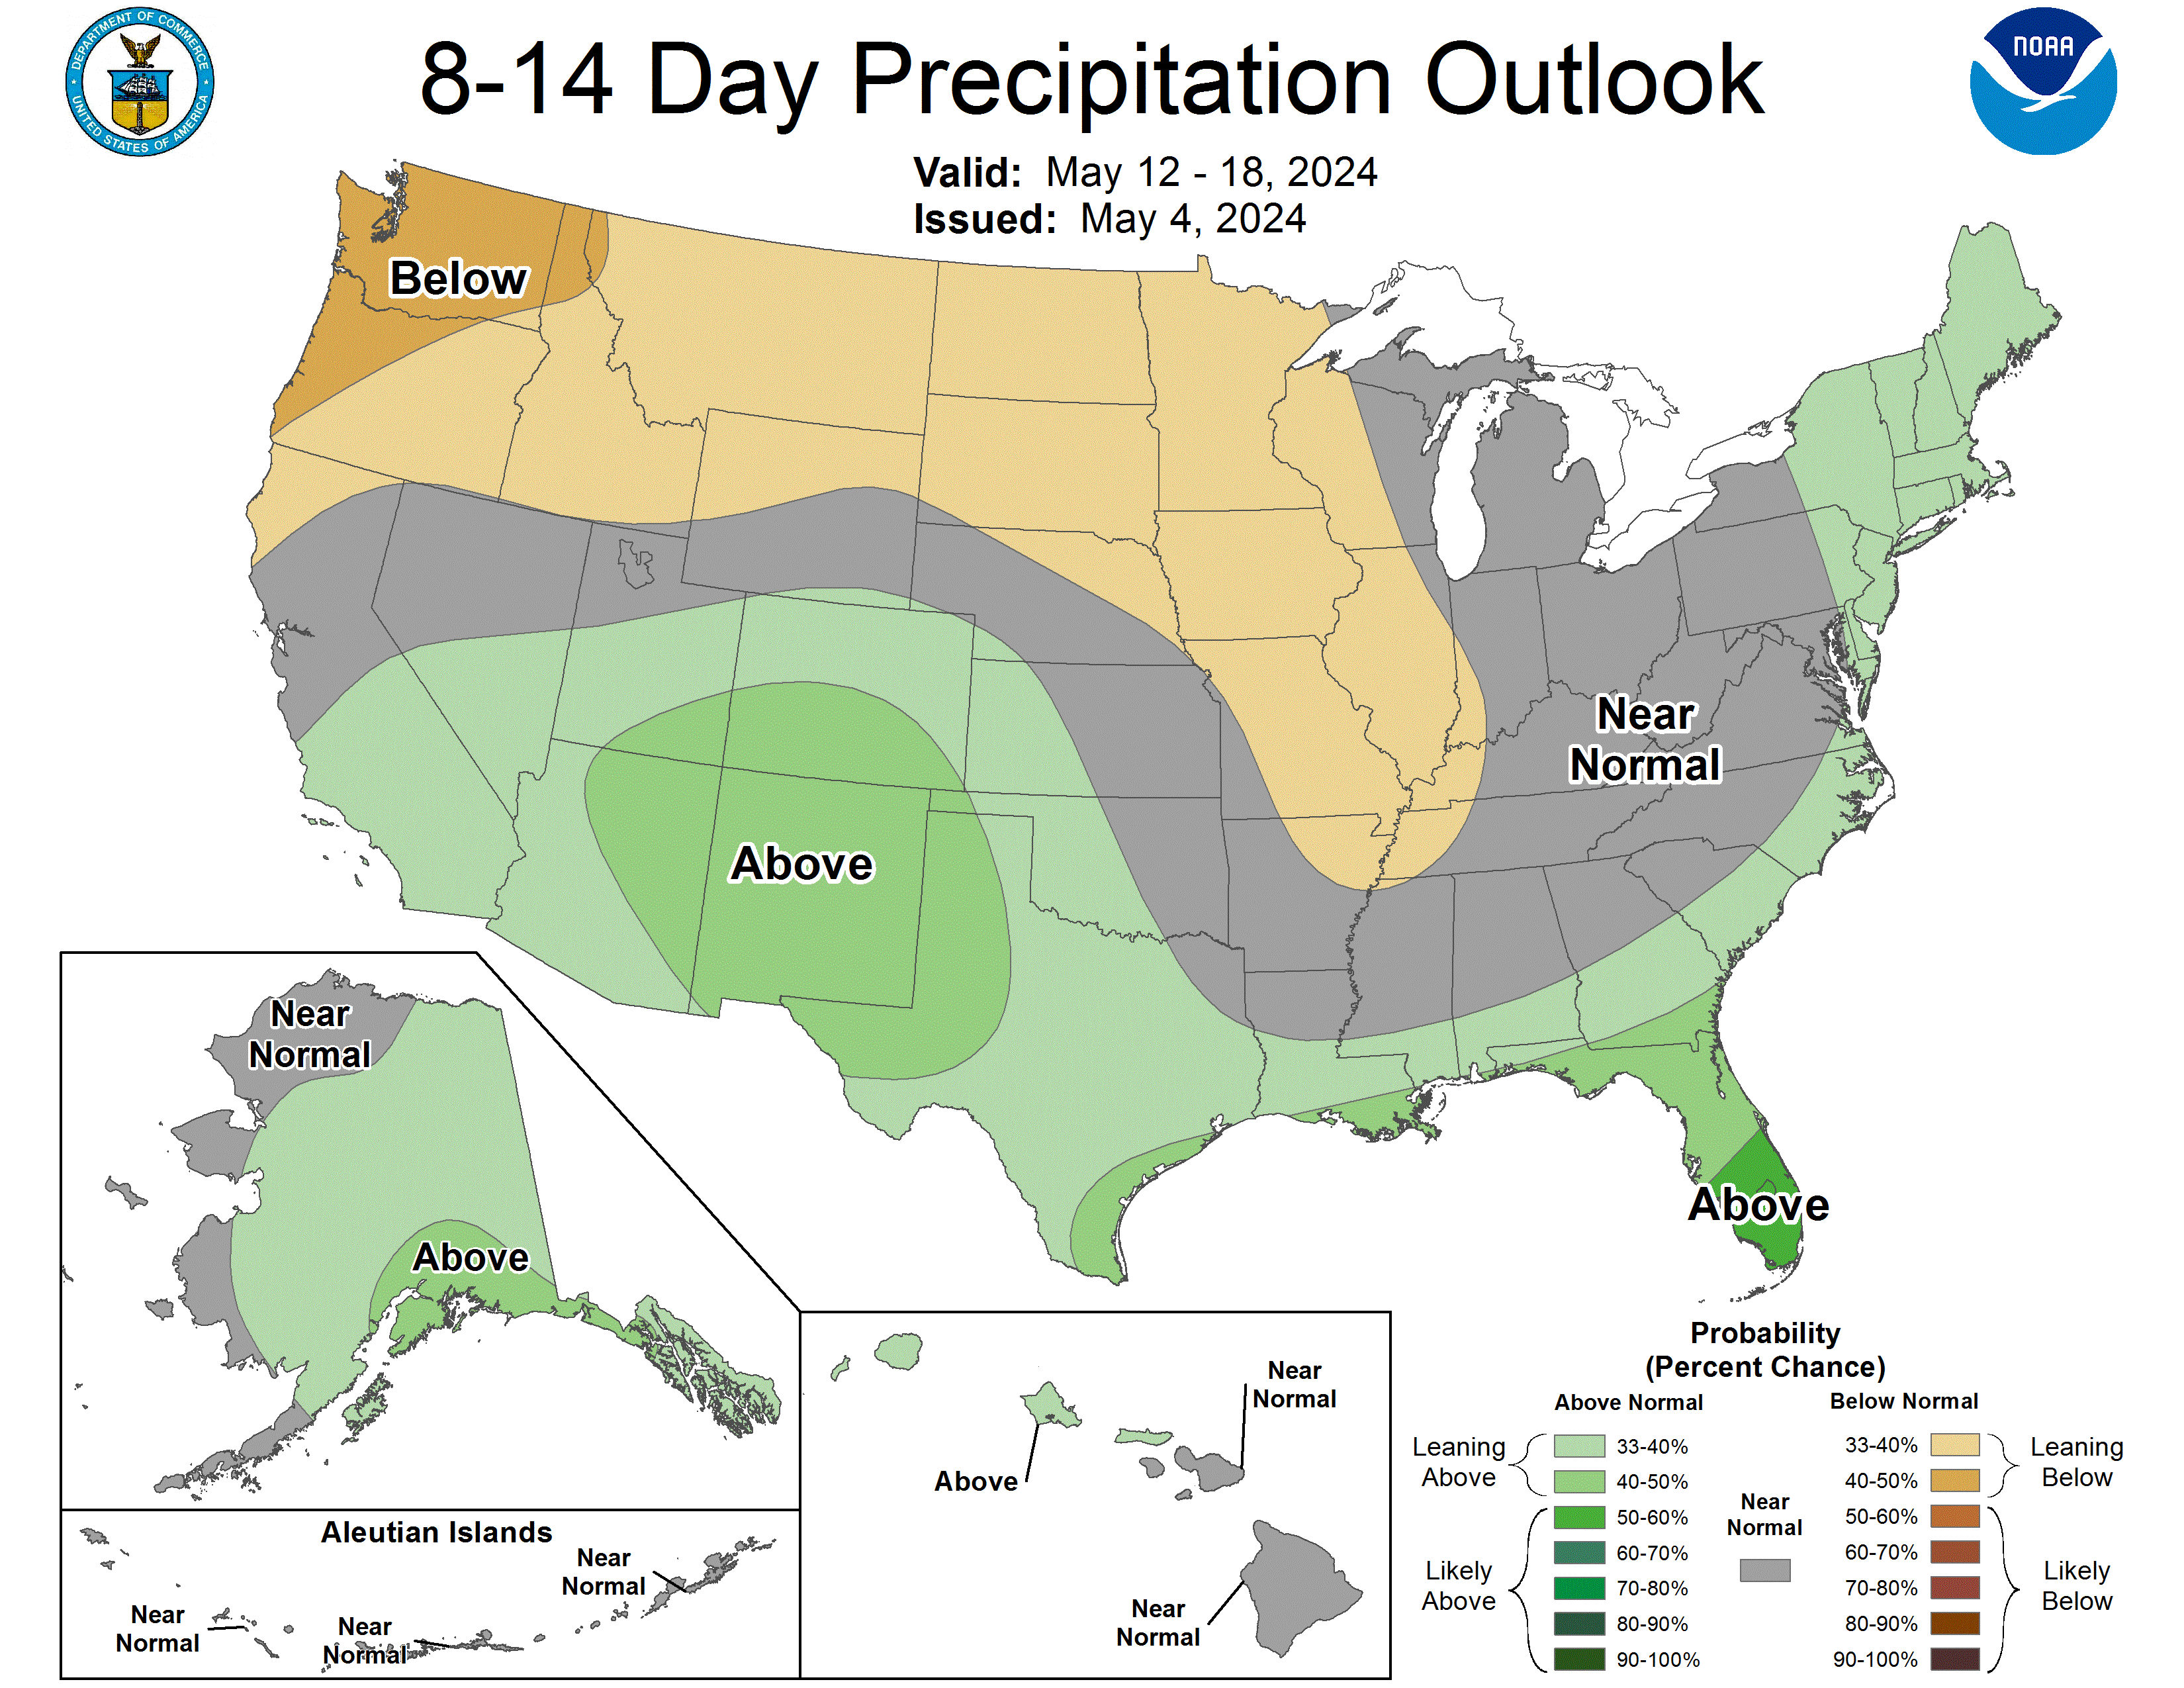 8-14 Day Precipitation image